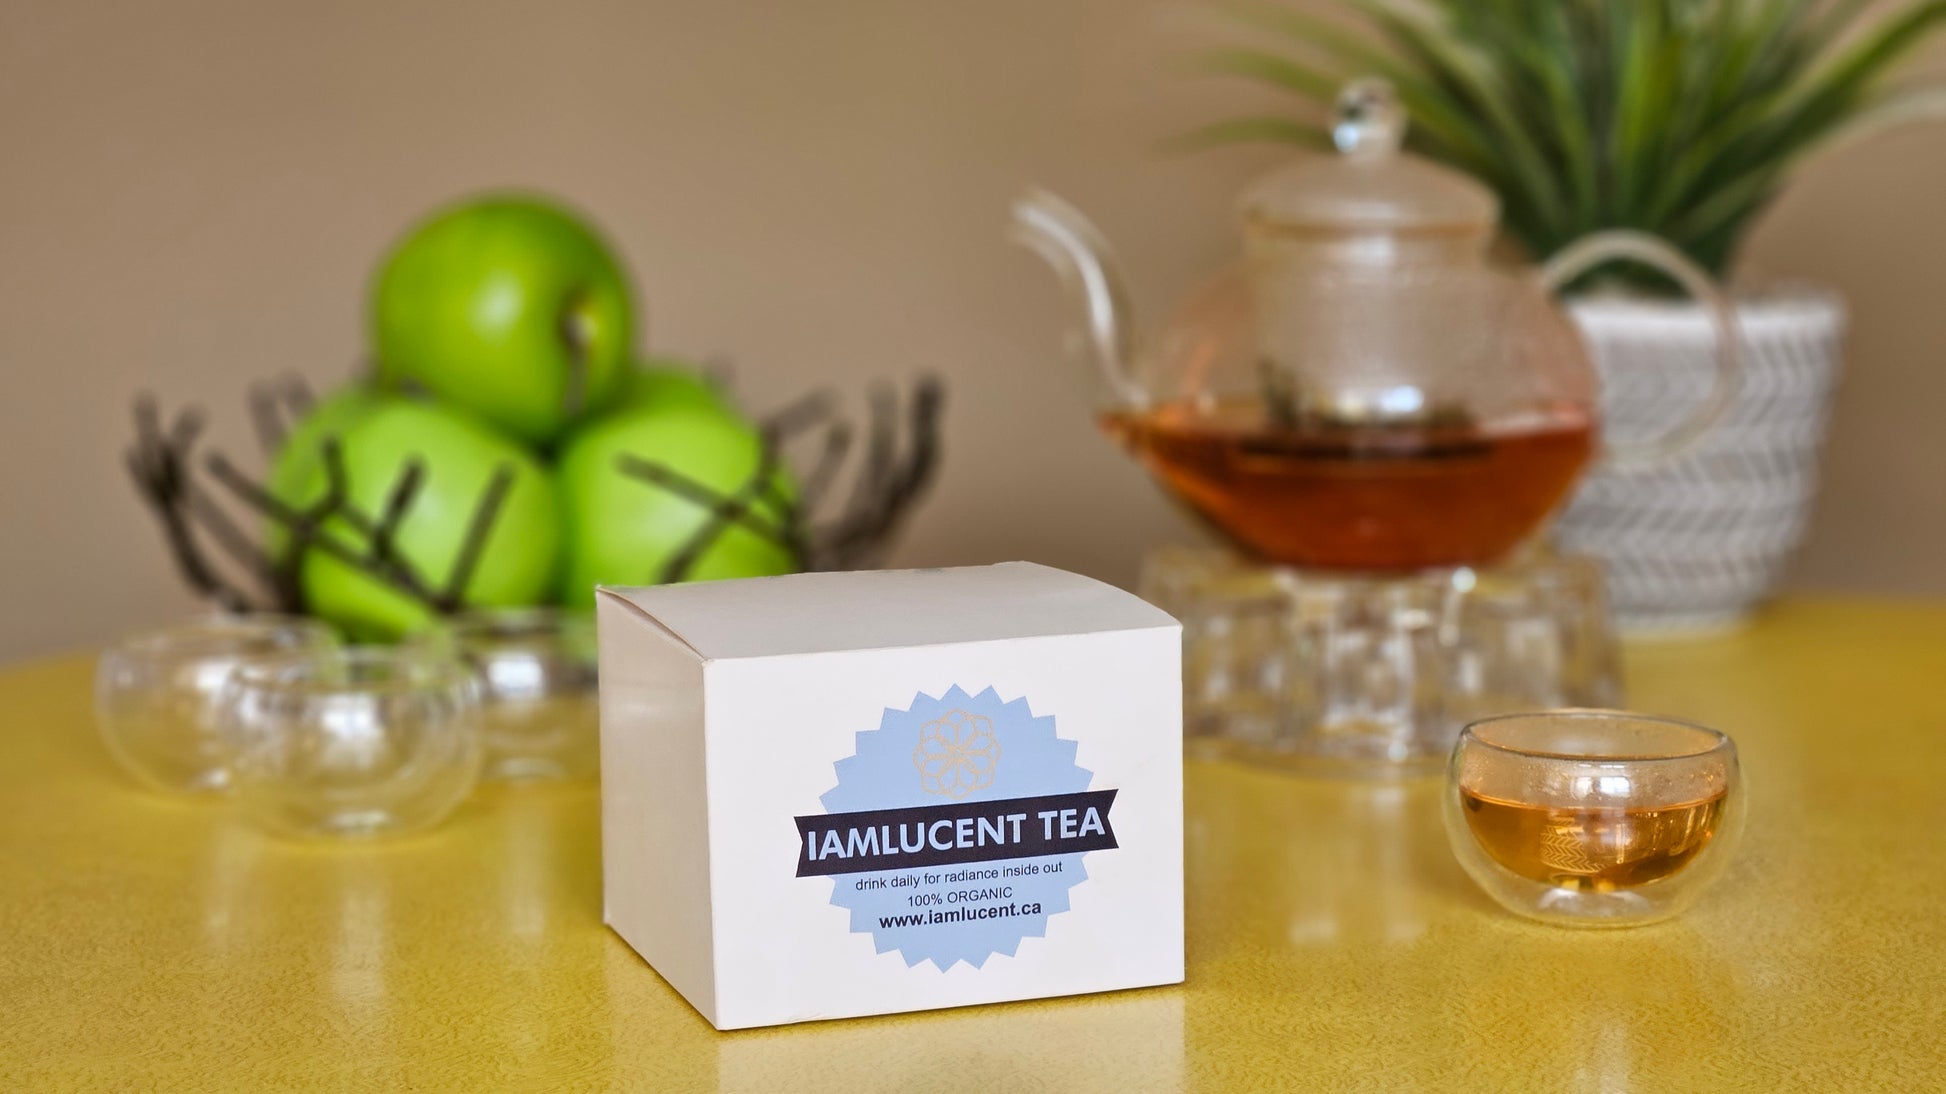 IamLucent teapot and box